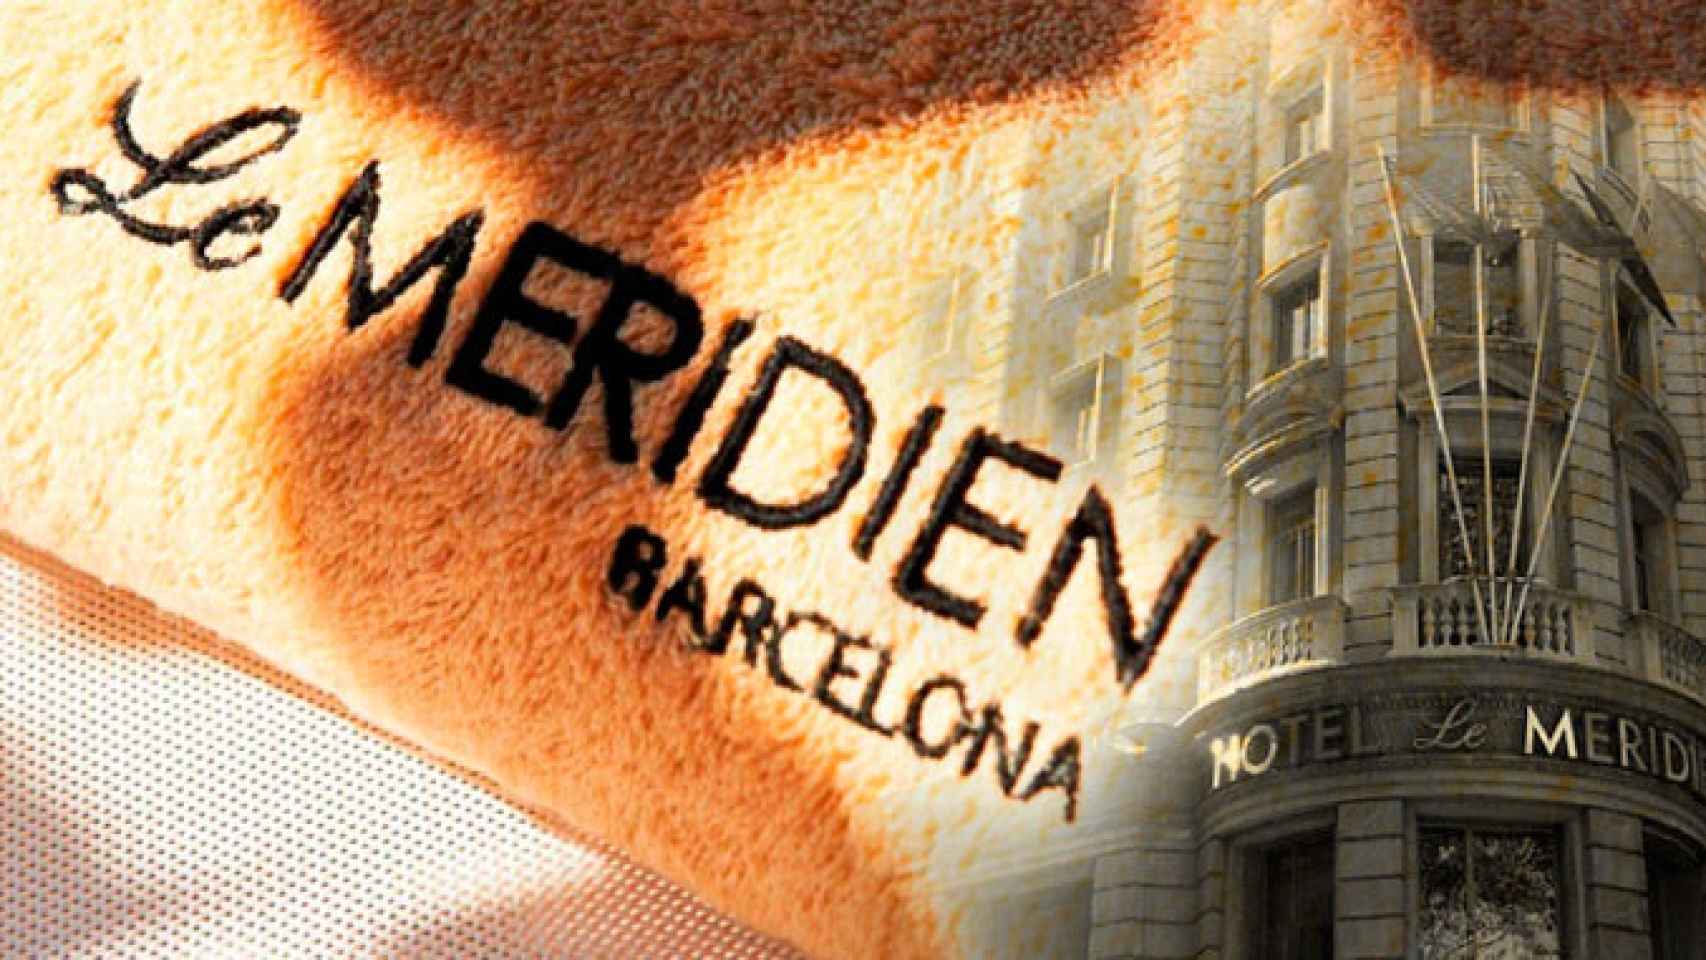 le meridien hotel barcelona madrid